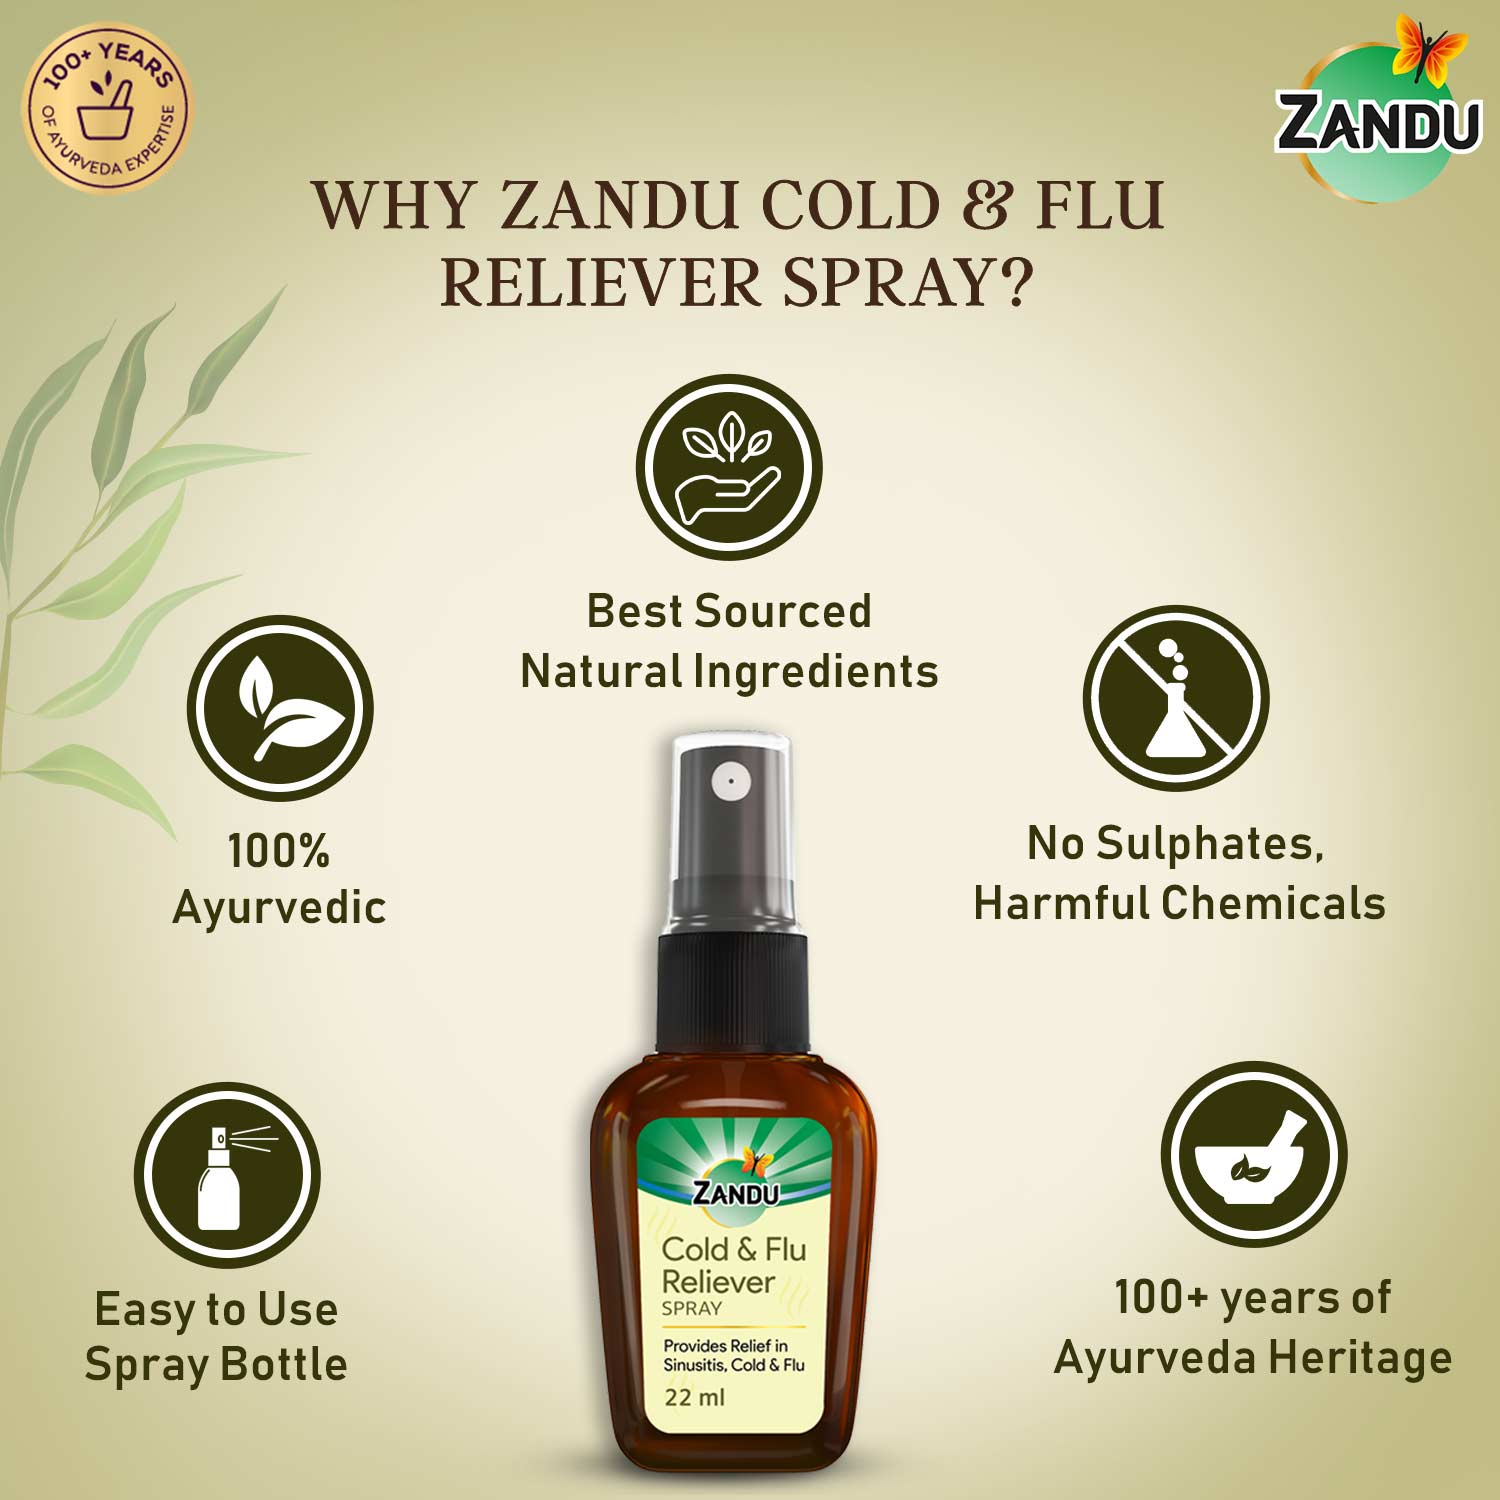 Why choose Zandu Cold & Flu Nasal Reliever Spray